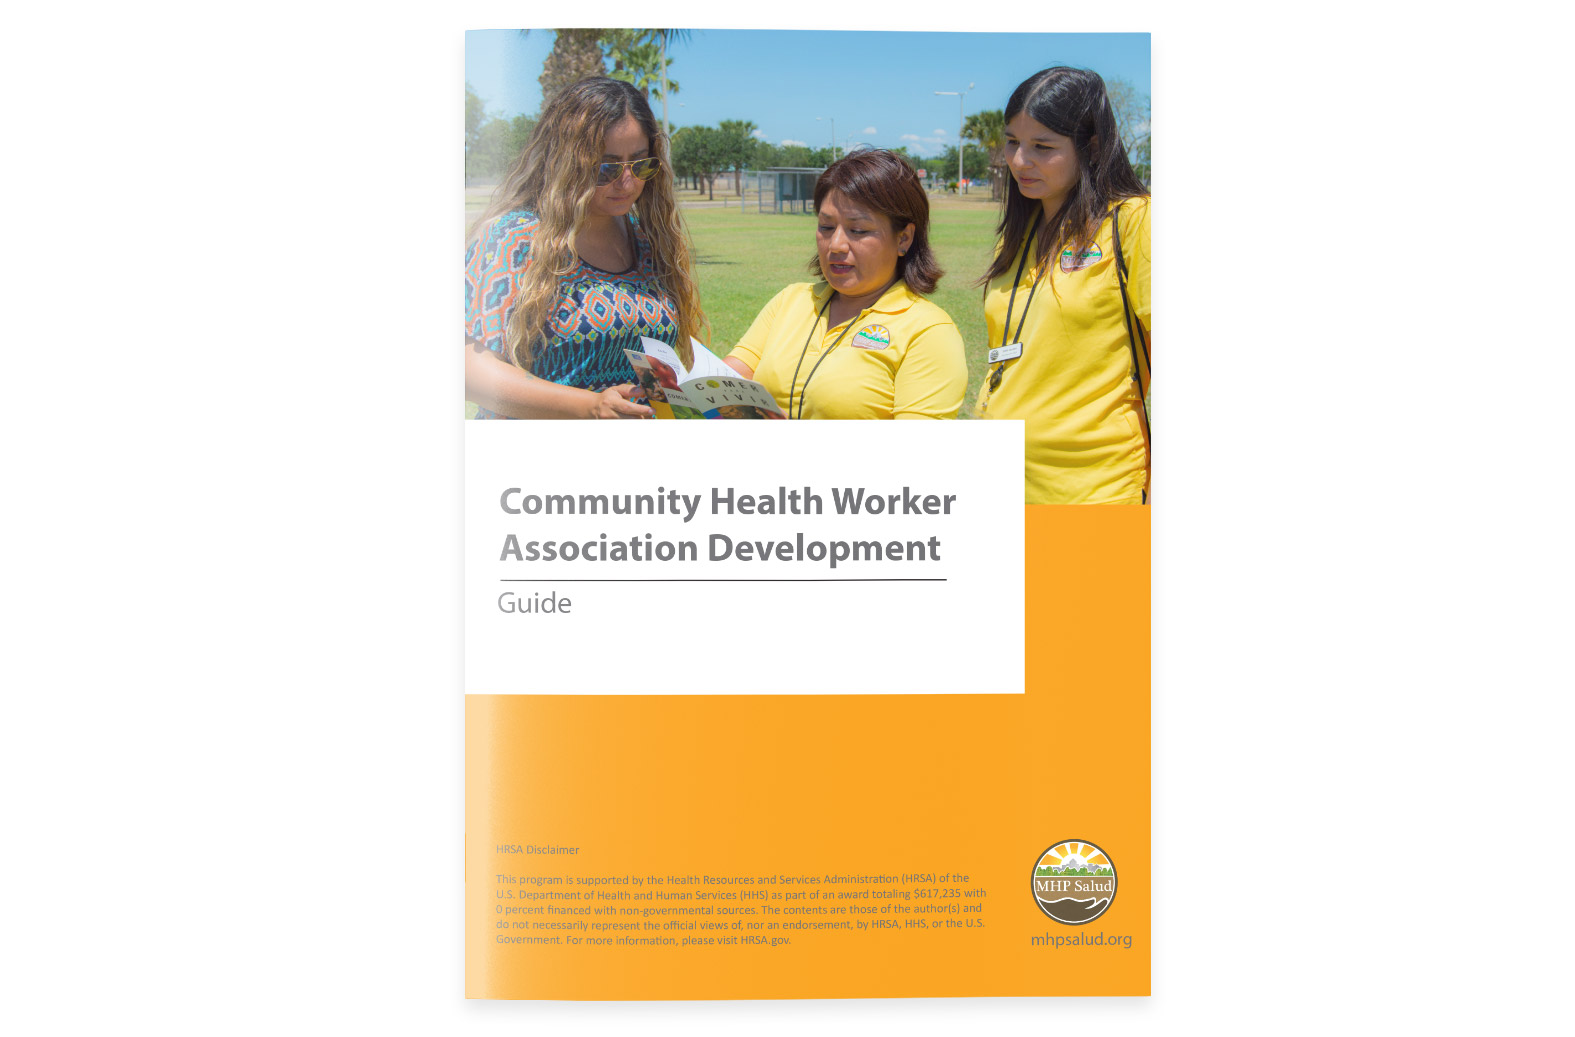 Community Health Worker Association Guide